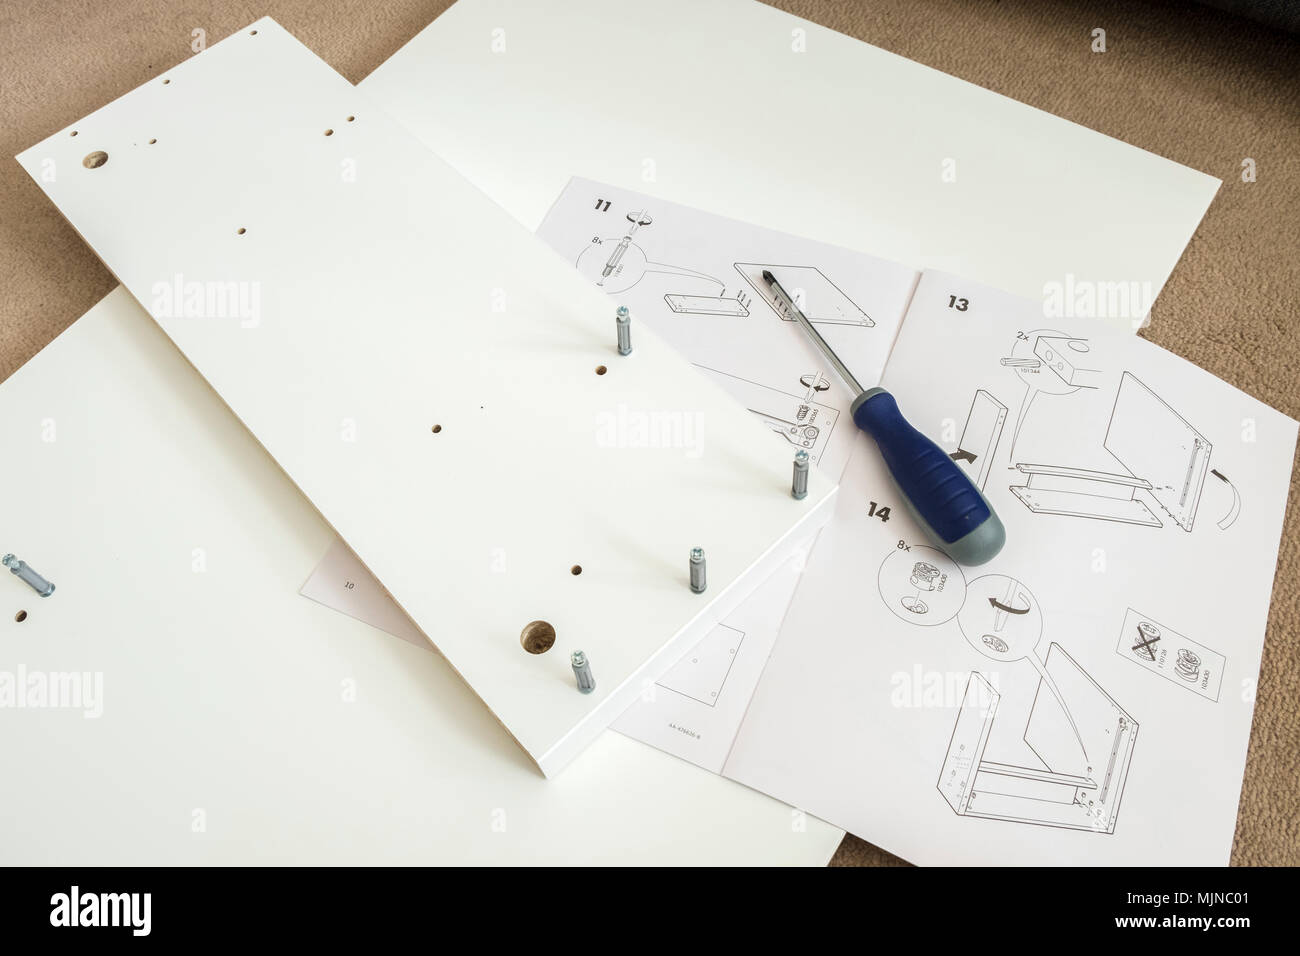 Ikea Selbstmontage Möbel Anleitungen und Tools Stockfoto